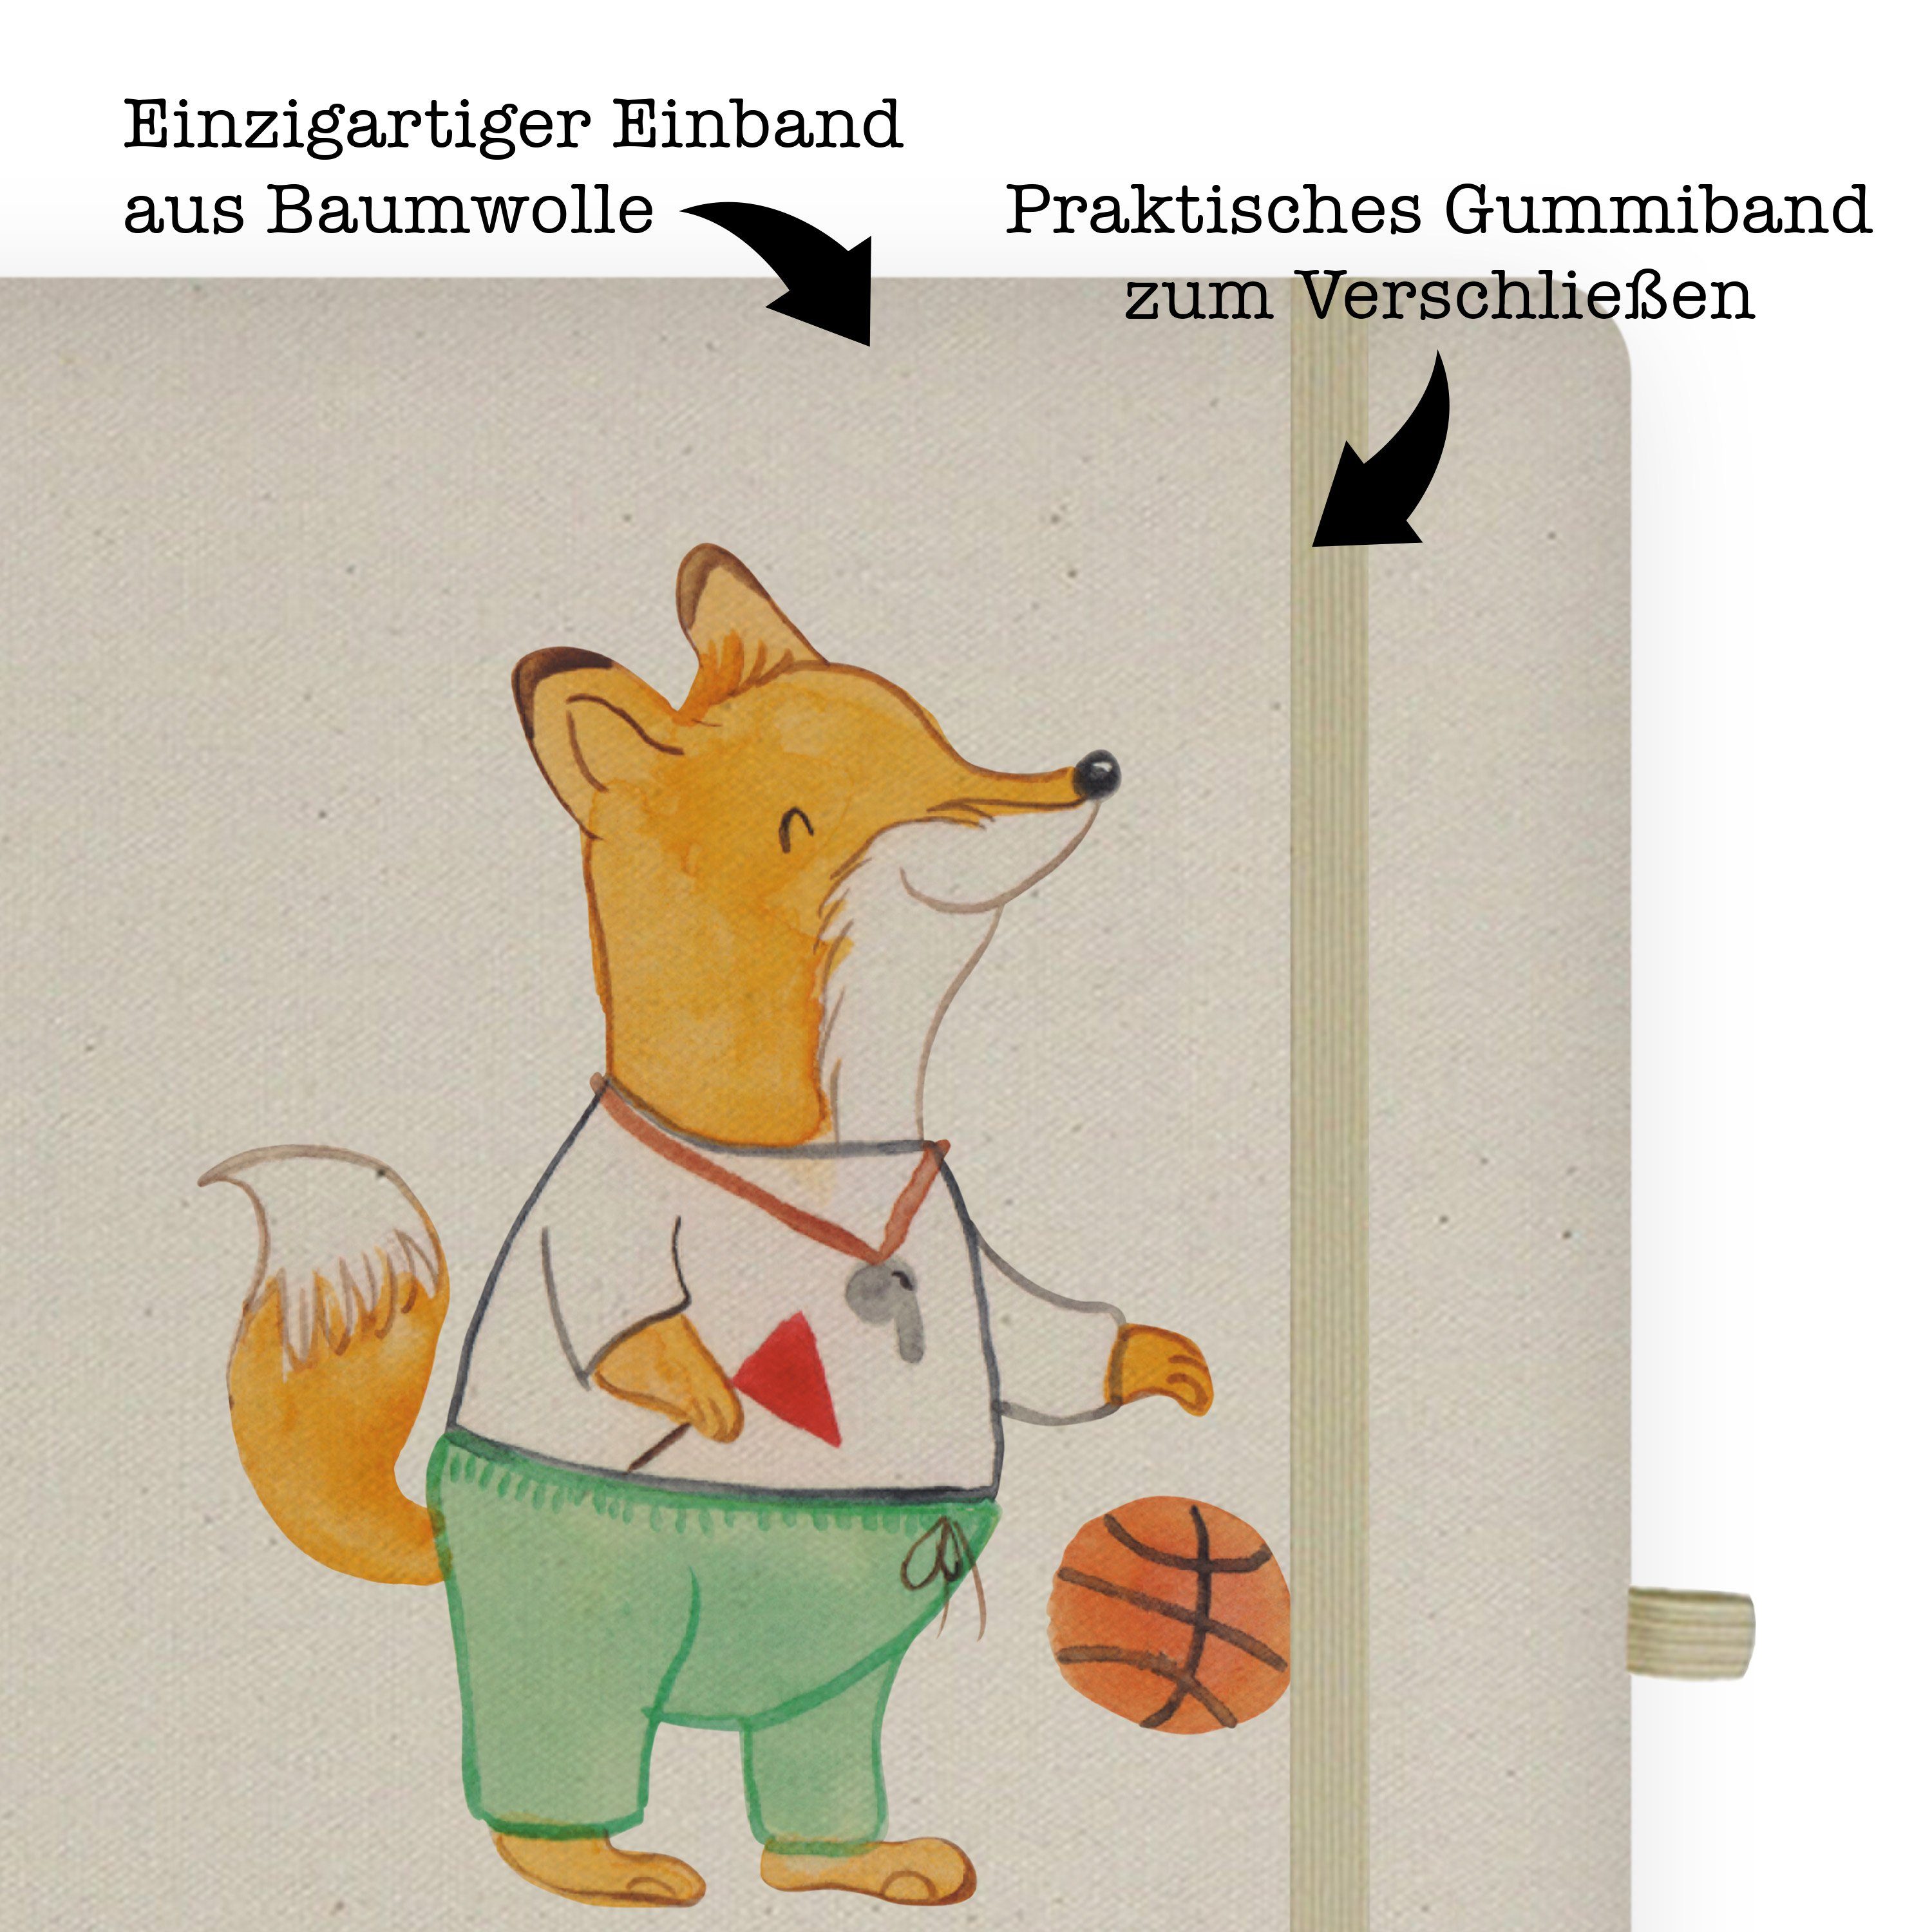 - & Mr. Notizbuch Basketballcoach, Panda Mrs. Transparent Geschenk, Panda - Basketballtrainer Herz mit Mr. & Mrs.